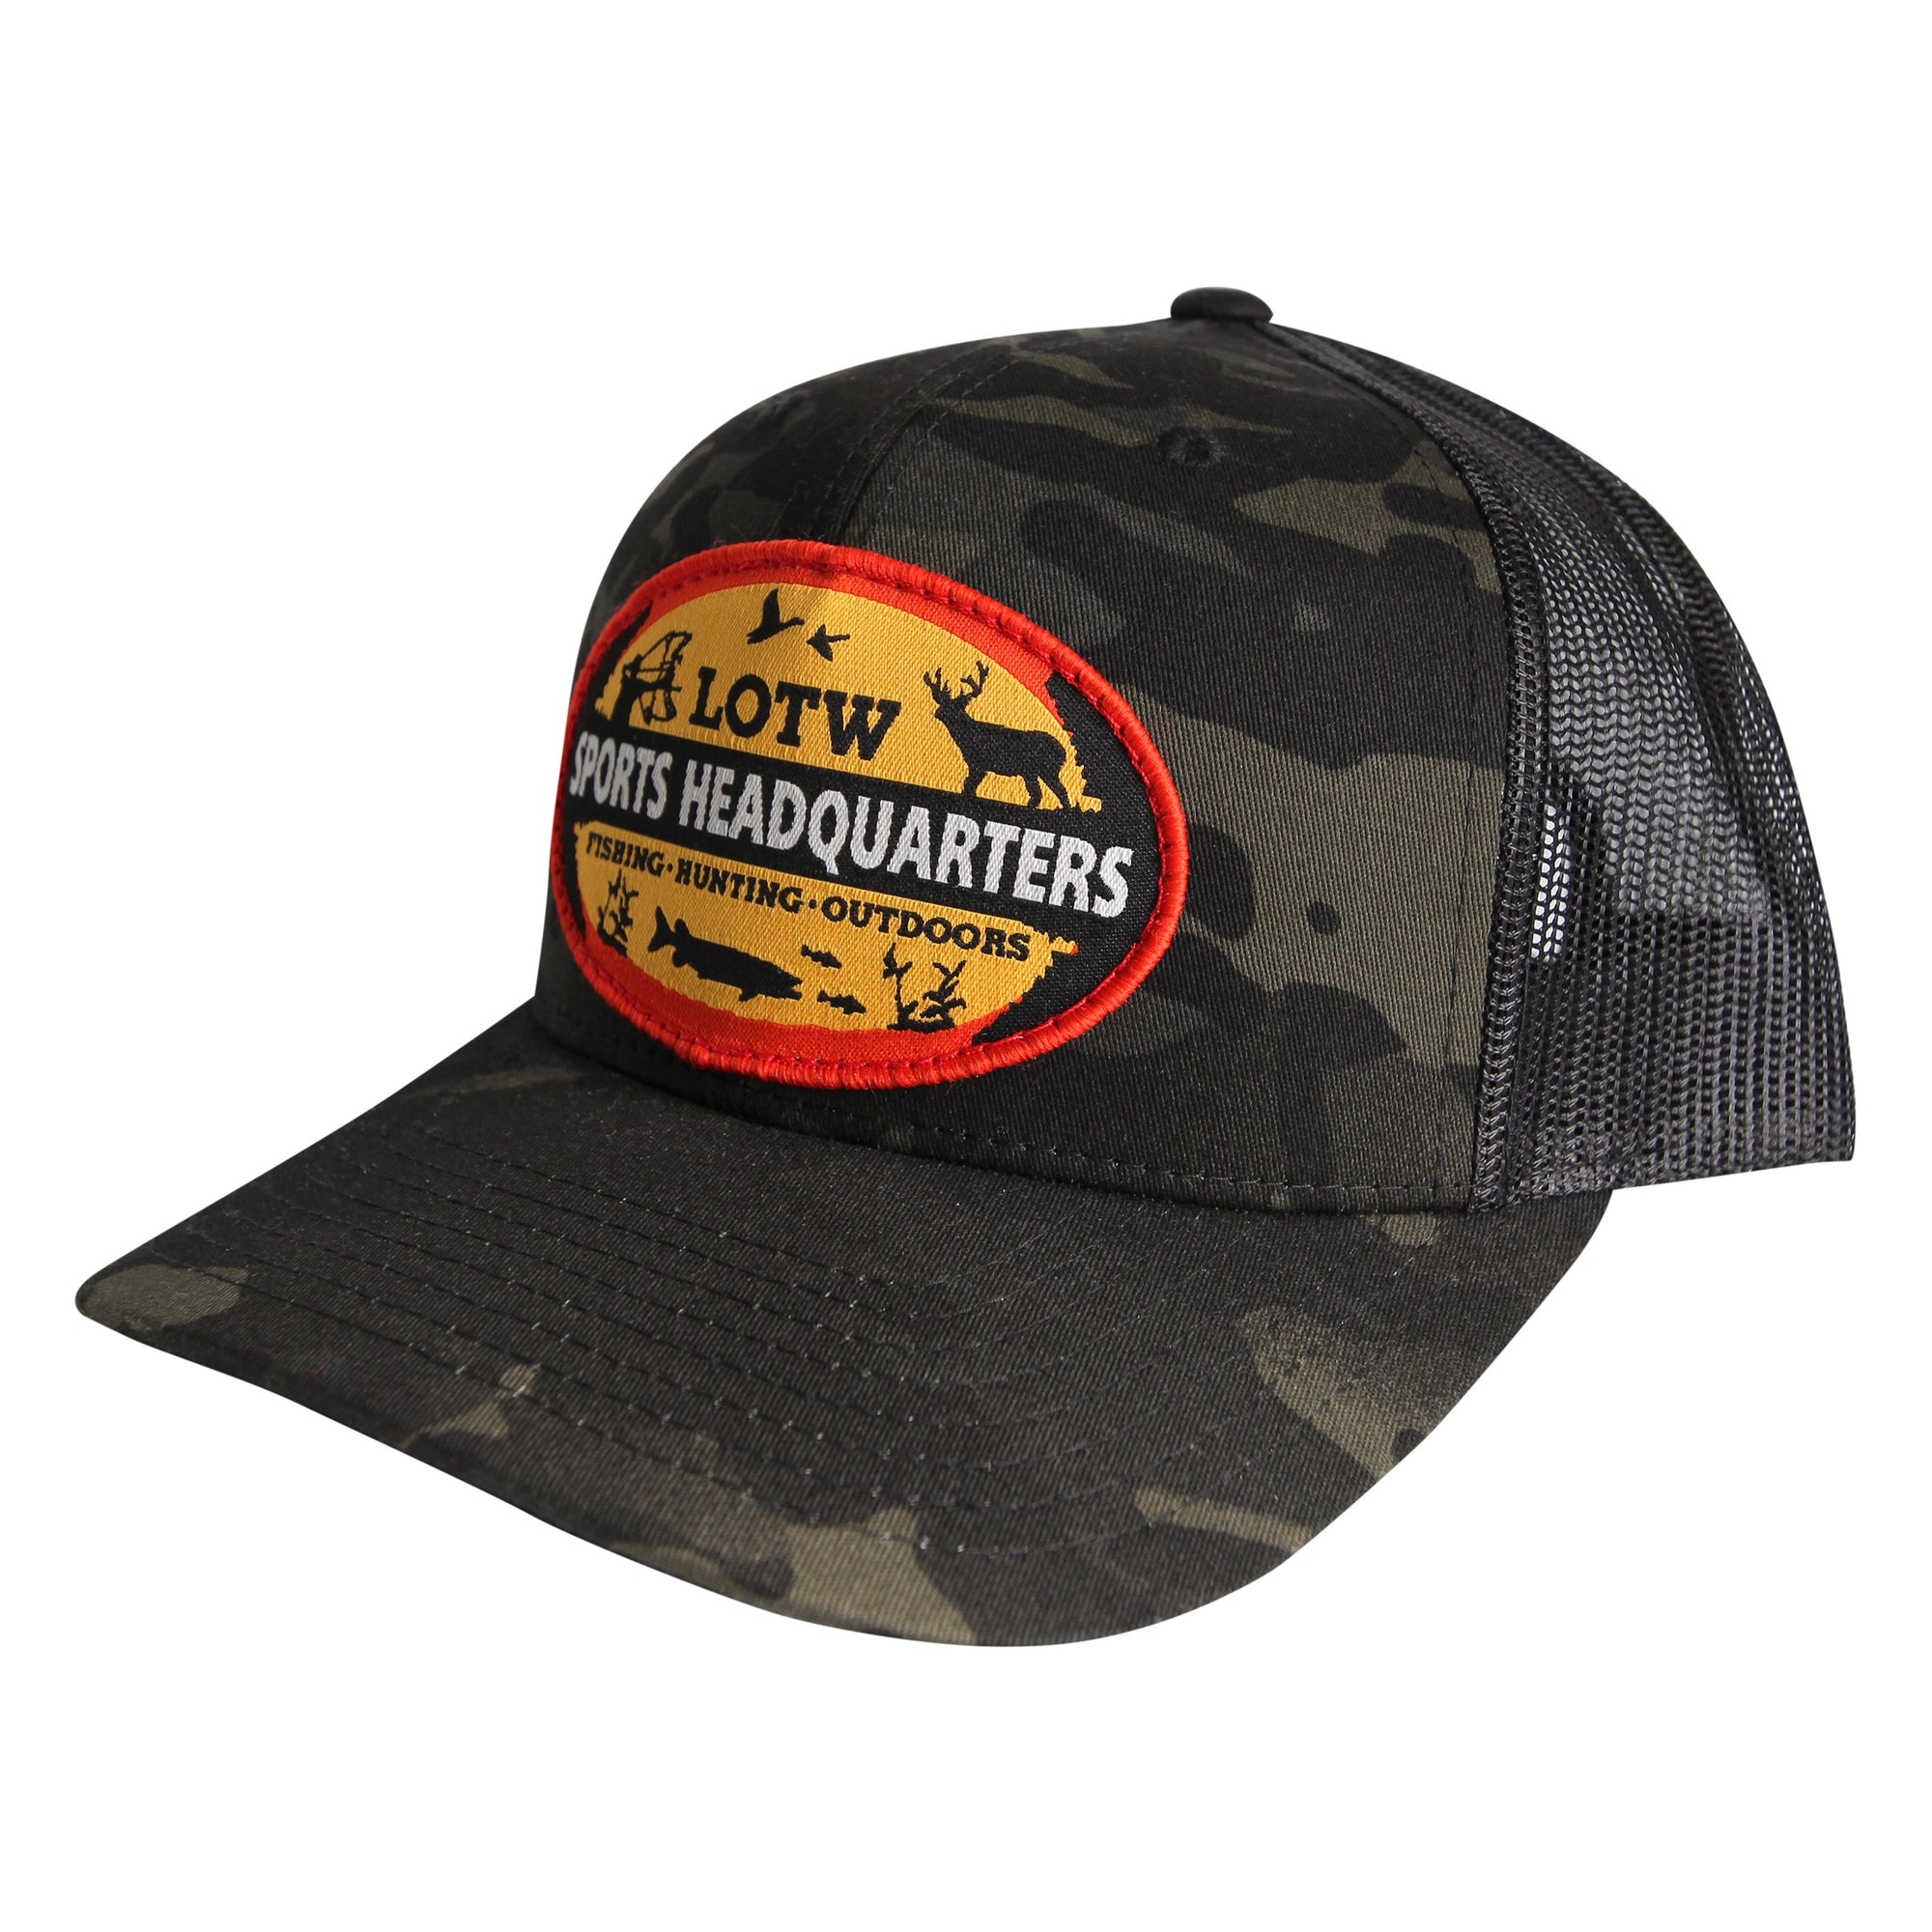 LOTW Sports Headquarters Classic Multicam Snapback Trucker Hats - Multicam Tropic